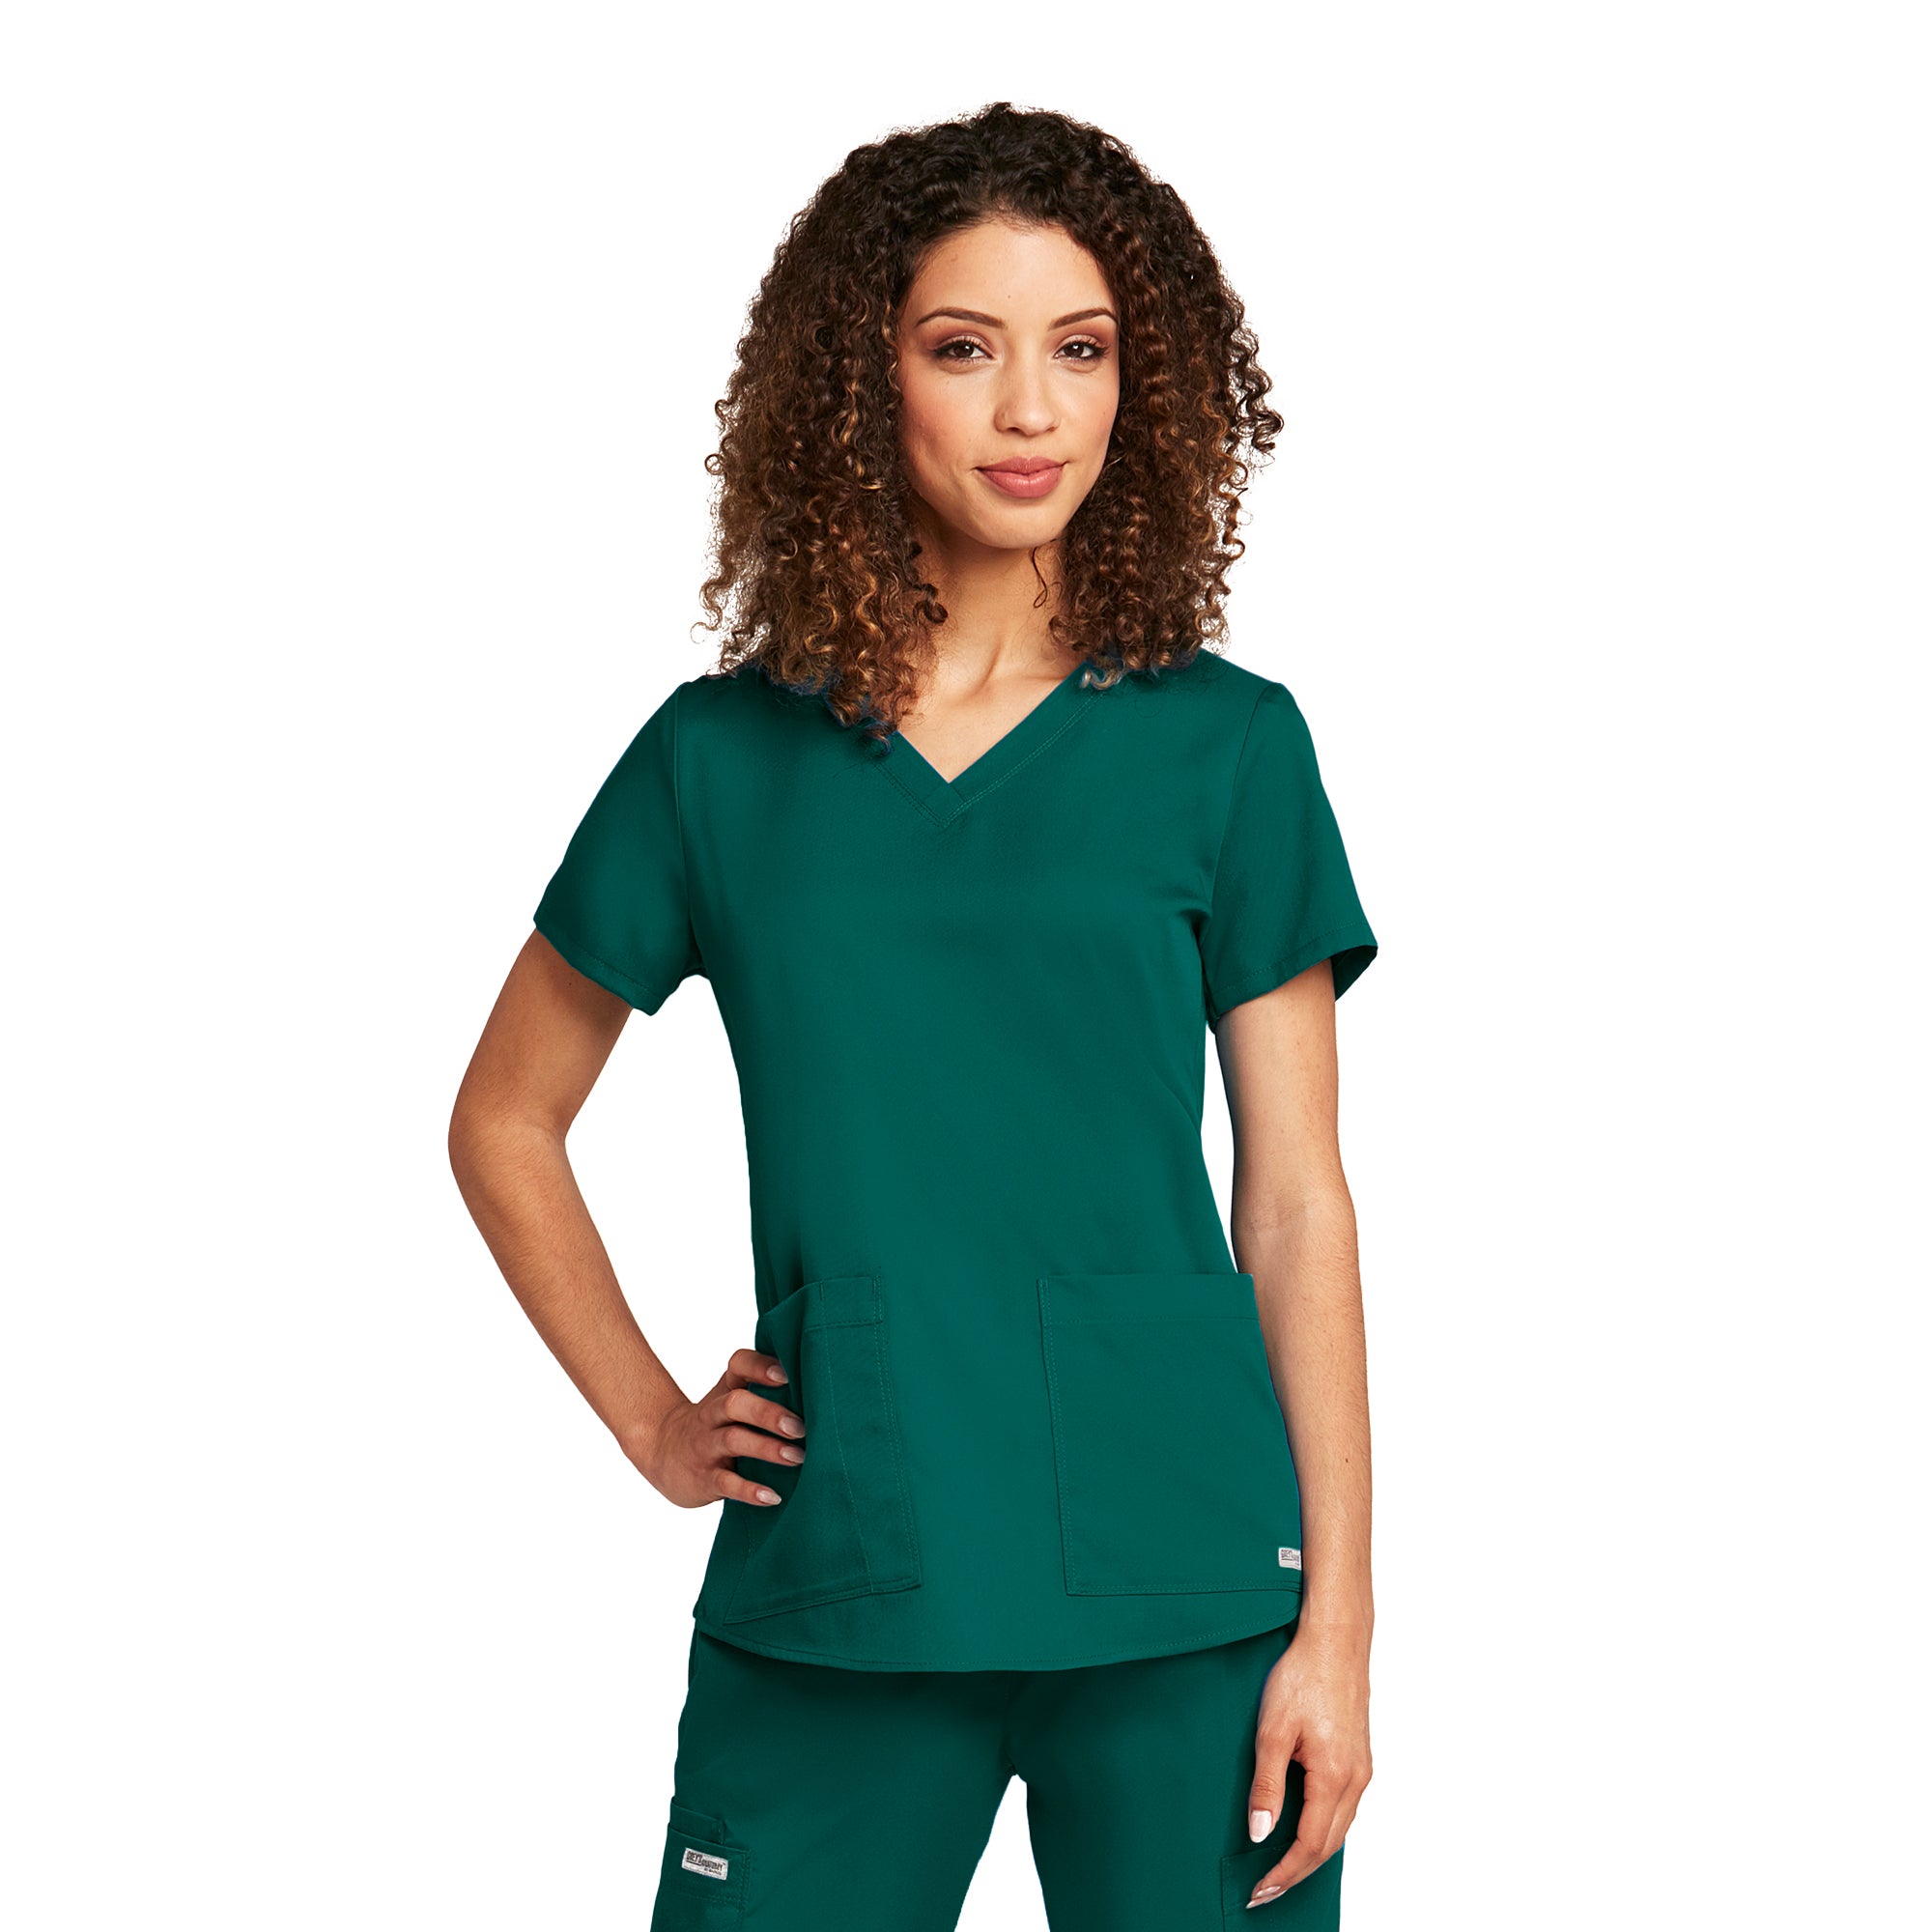 Greys Anatomy Classic V-Neck Top - Company Store Uniforms